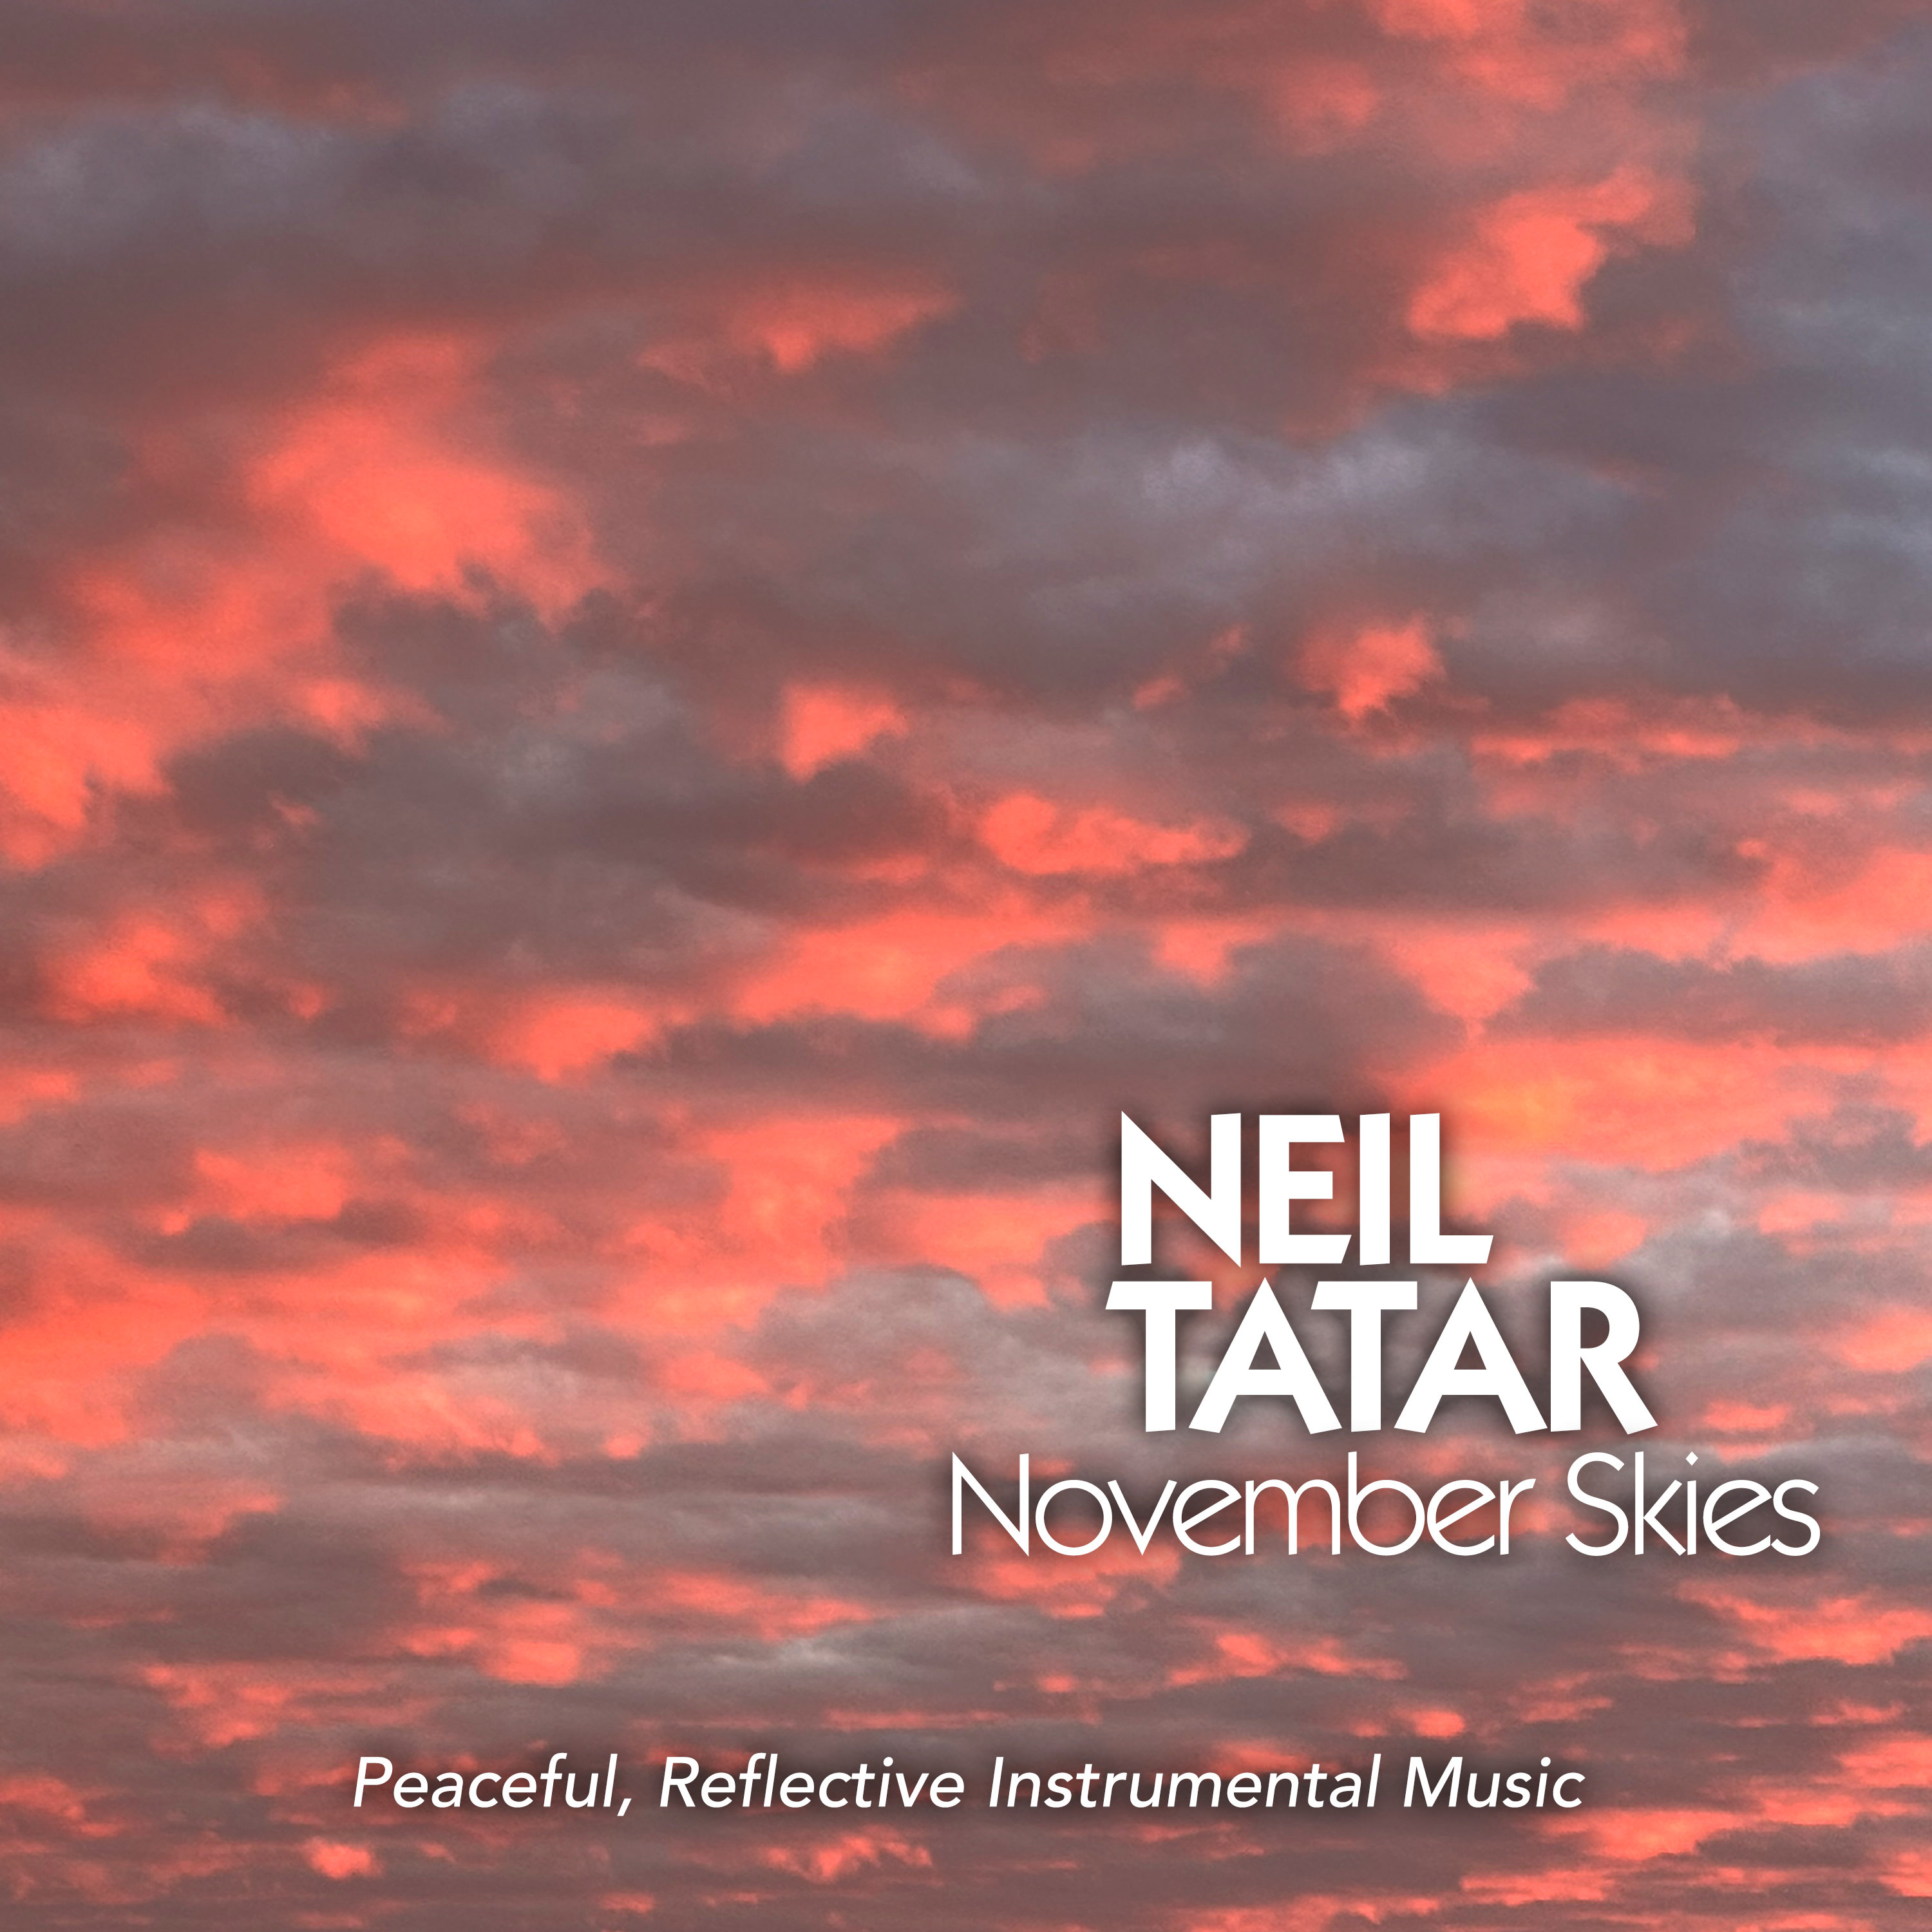 November Skies Neil Tatar Single Cover